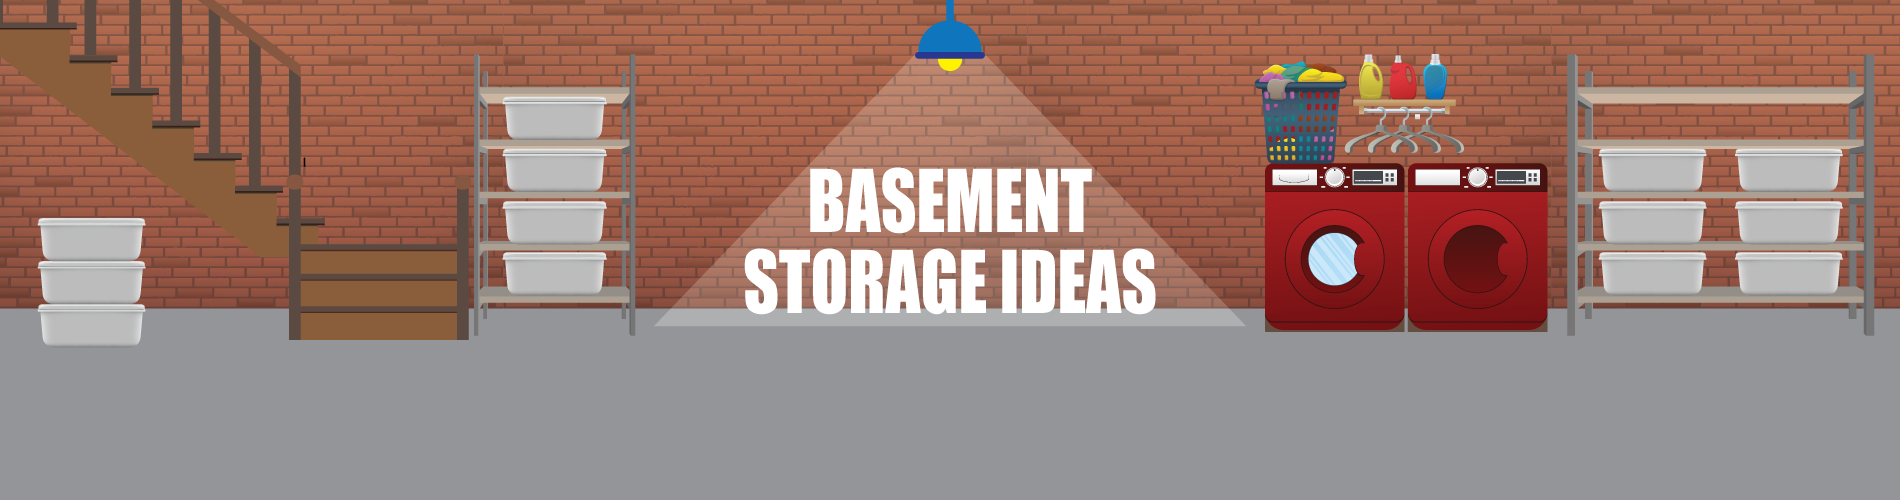 basement storage ideas - Mason Lansing Safe Storage